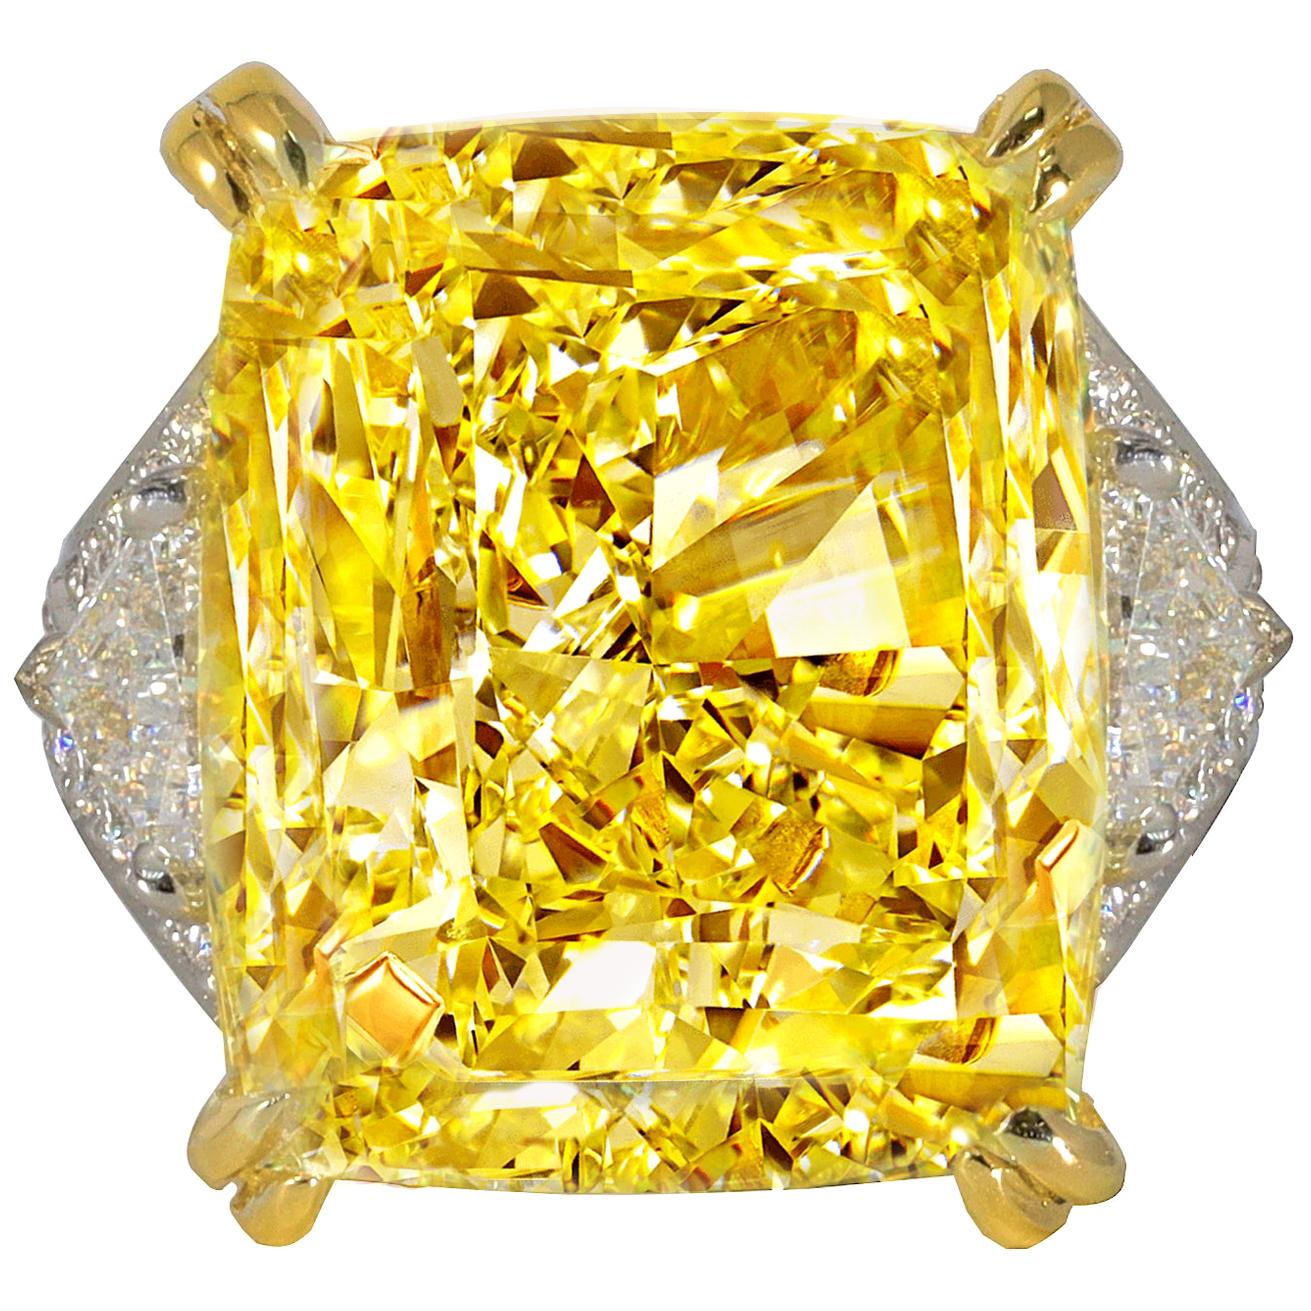 34.46 Carat Fancy Intense Yellow VS2 Radiant Cut Diamond Ring